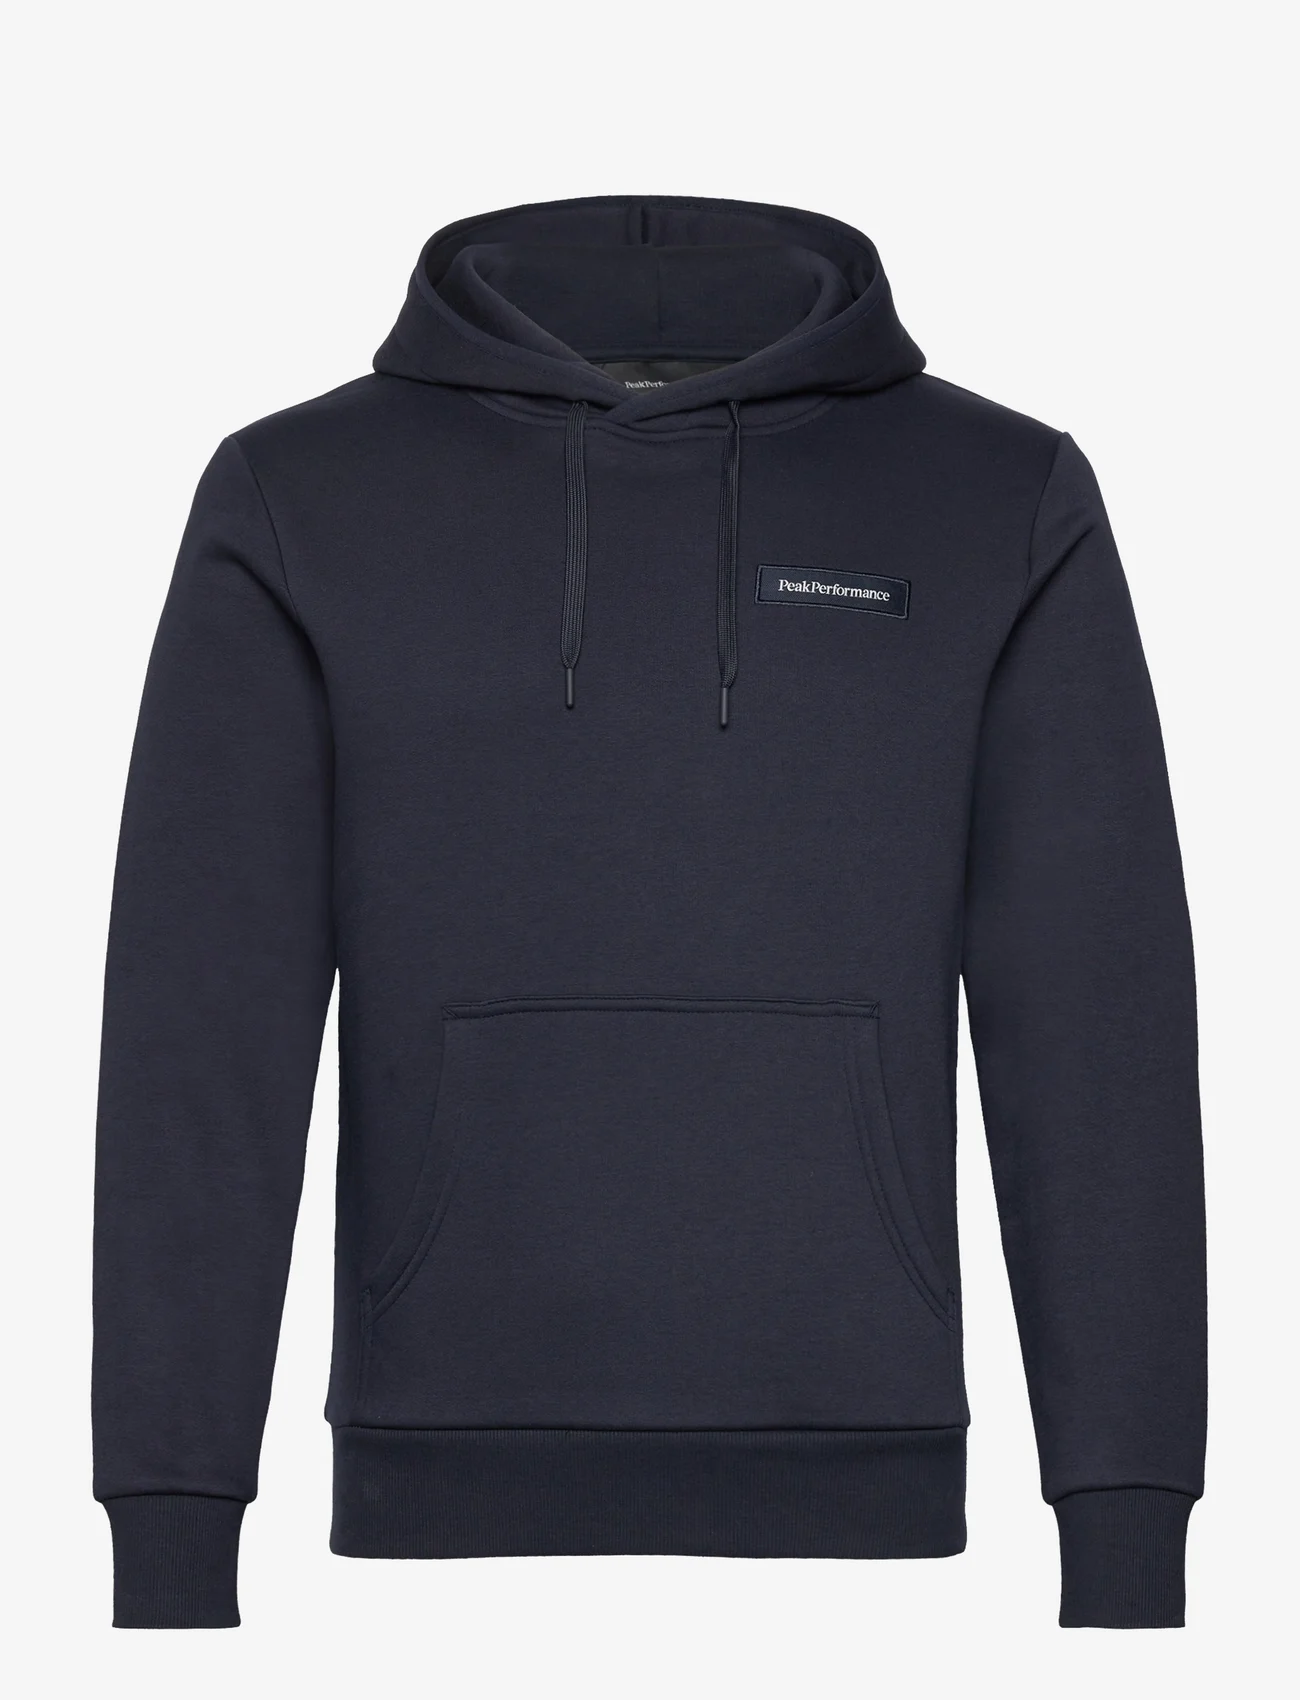 Peak Performance - M Logo Hood Sweatshirt - mid layer jackets - blue shadow - 0